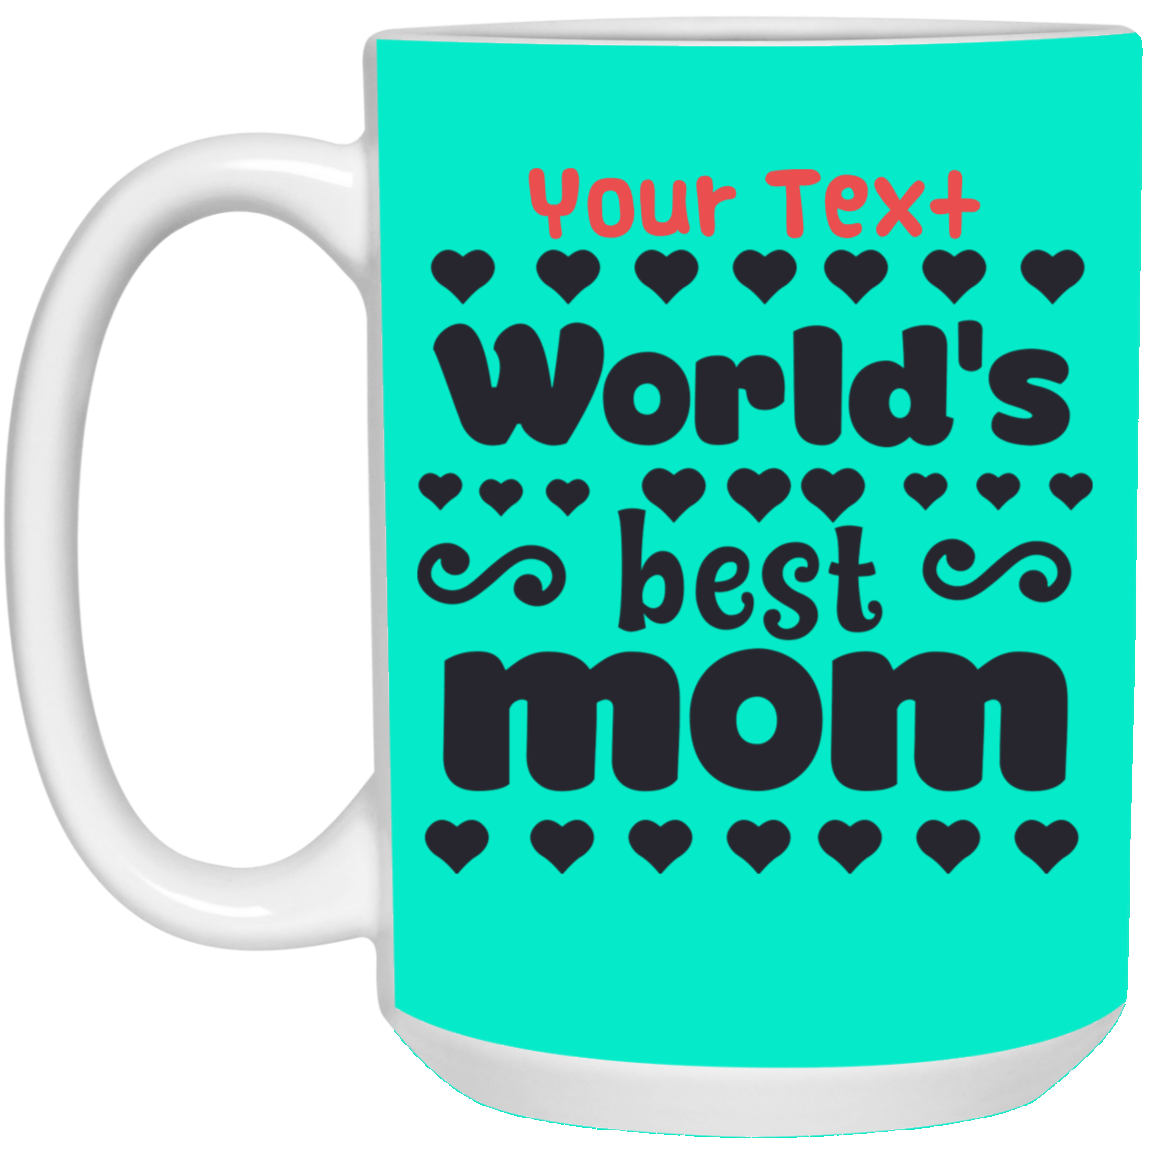 World's Best Mom White Ceramic Mug with Black Handle - 15 oz